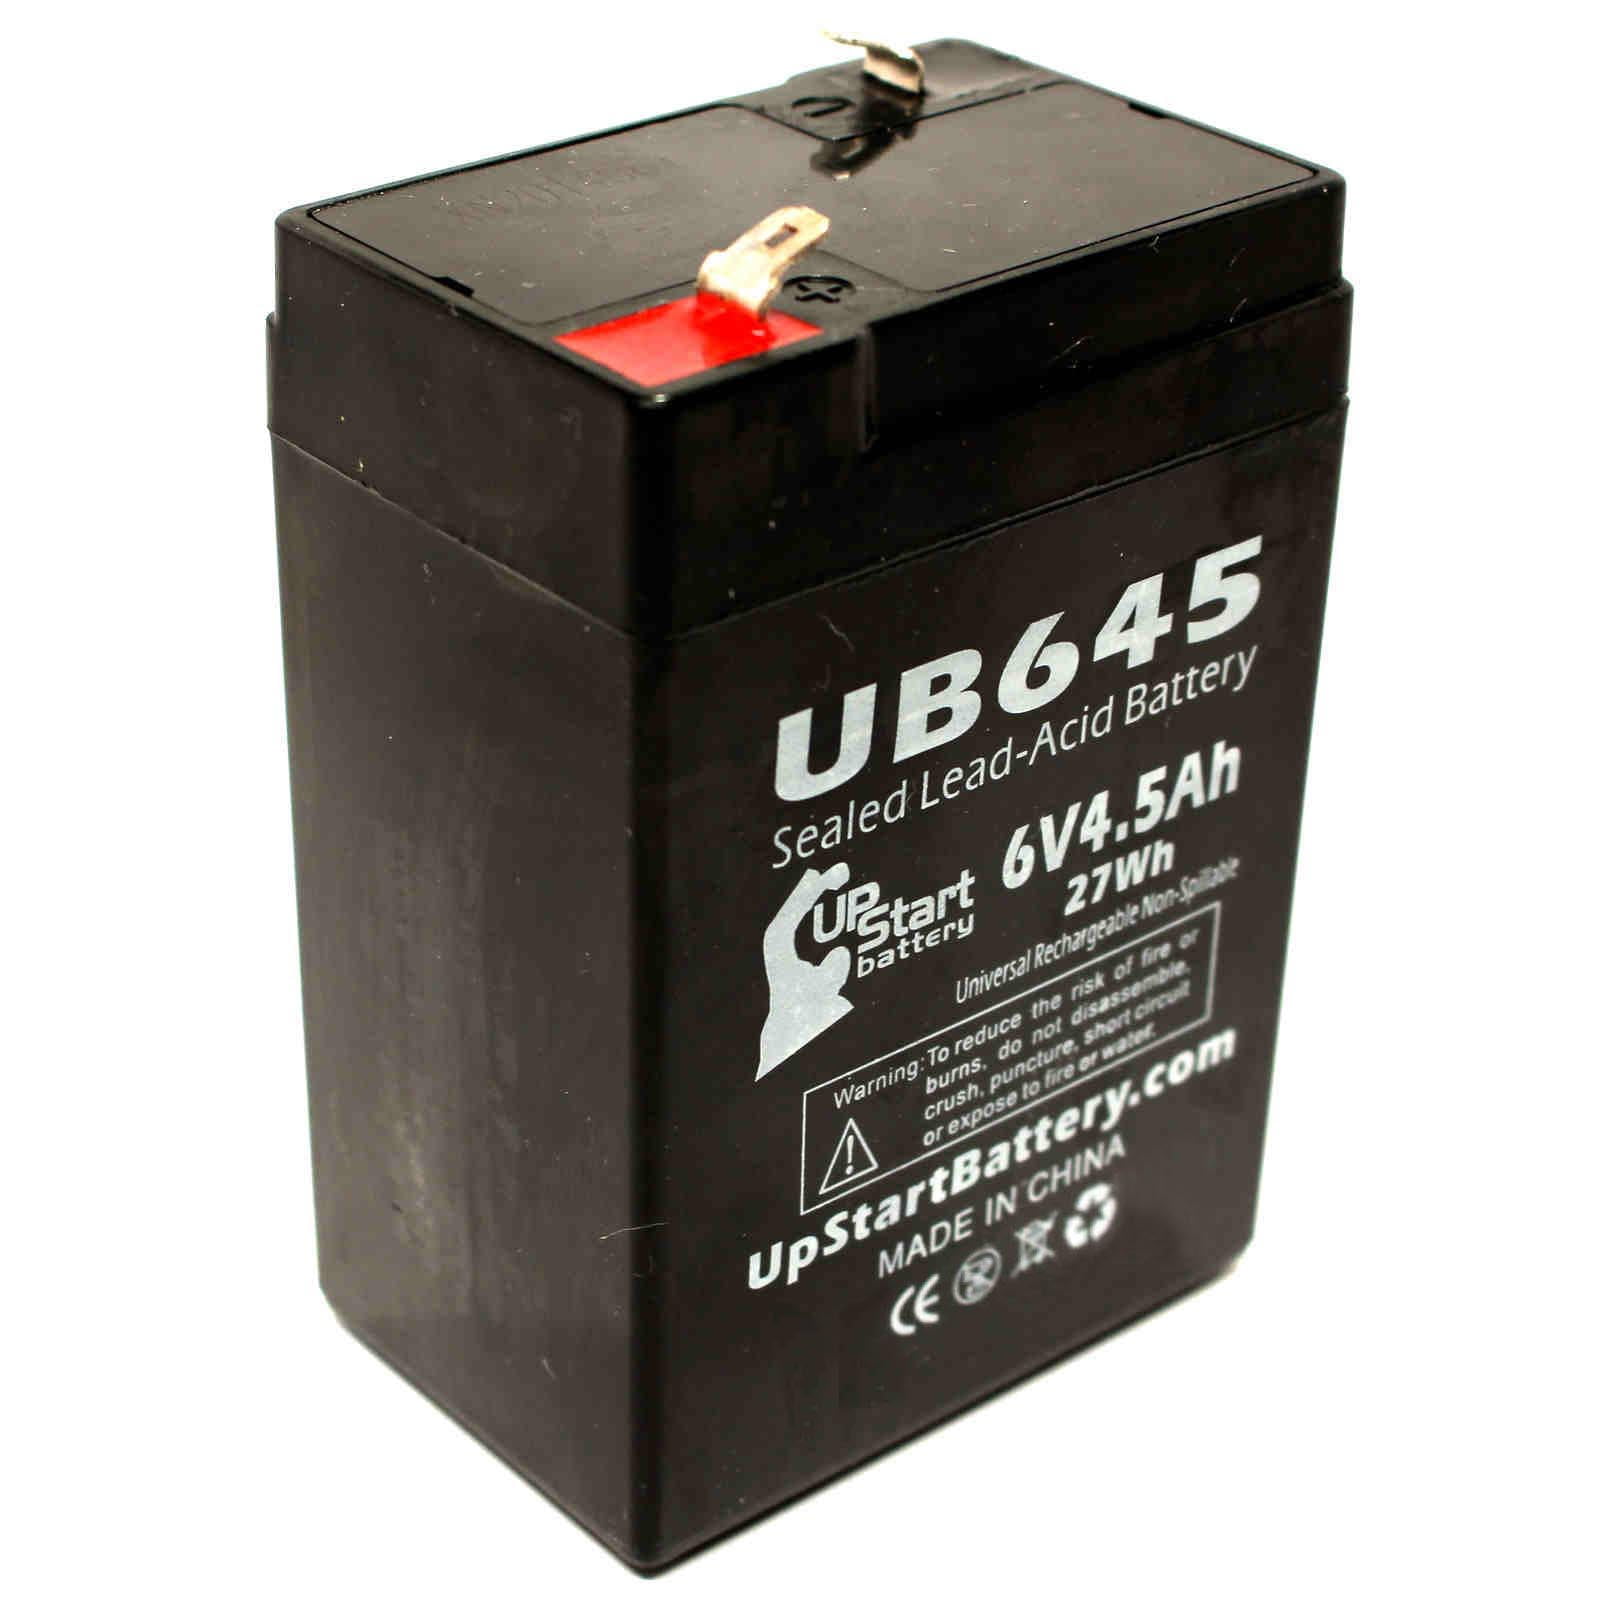 Sealed lead battery. Батарея Sealed lead-acid Rechargeable 4v. Sealed Rechargeable lead-acid Battery 6v. Аккумулятор Sealed lead-acid Battery. Lead acid аккумулятор 4v.